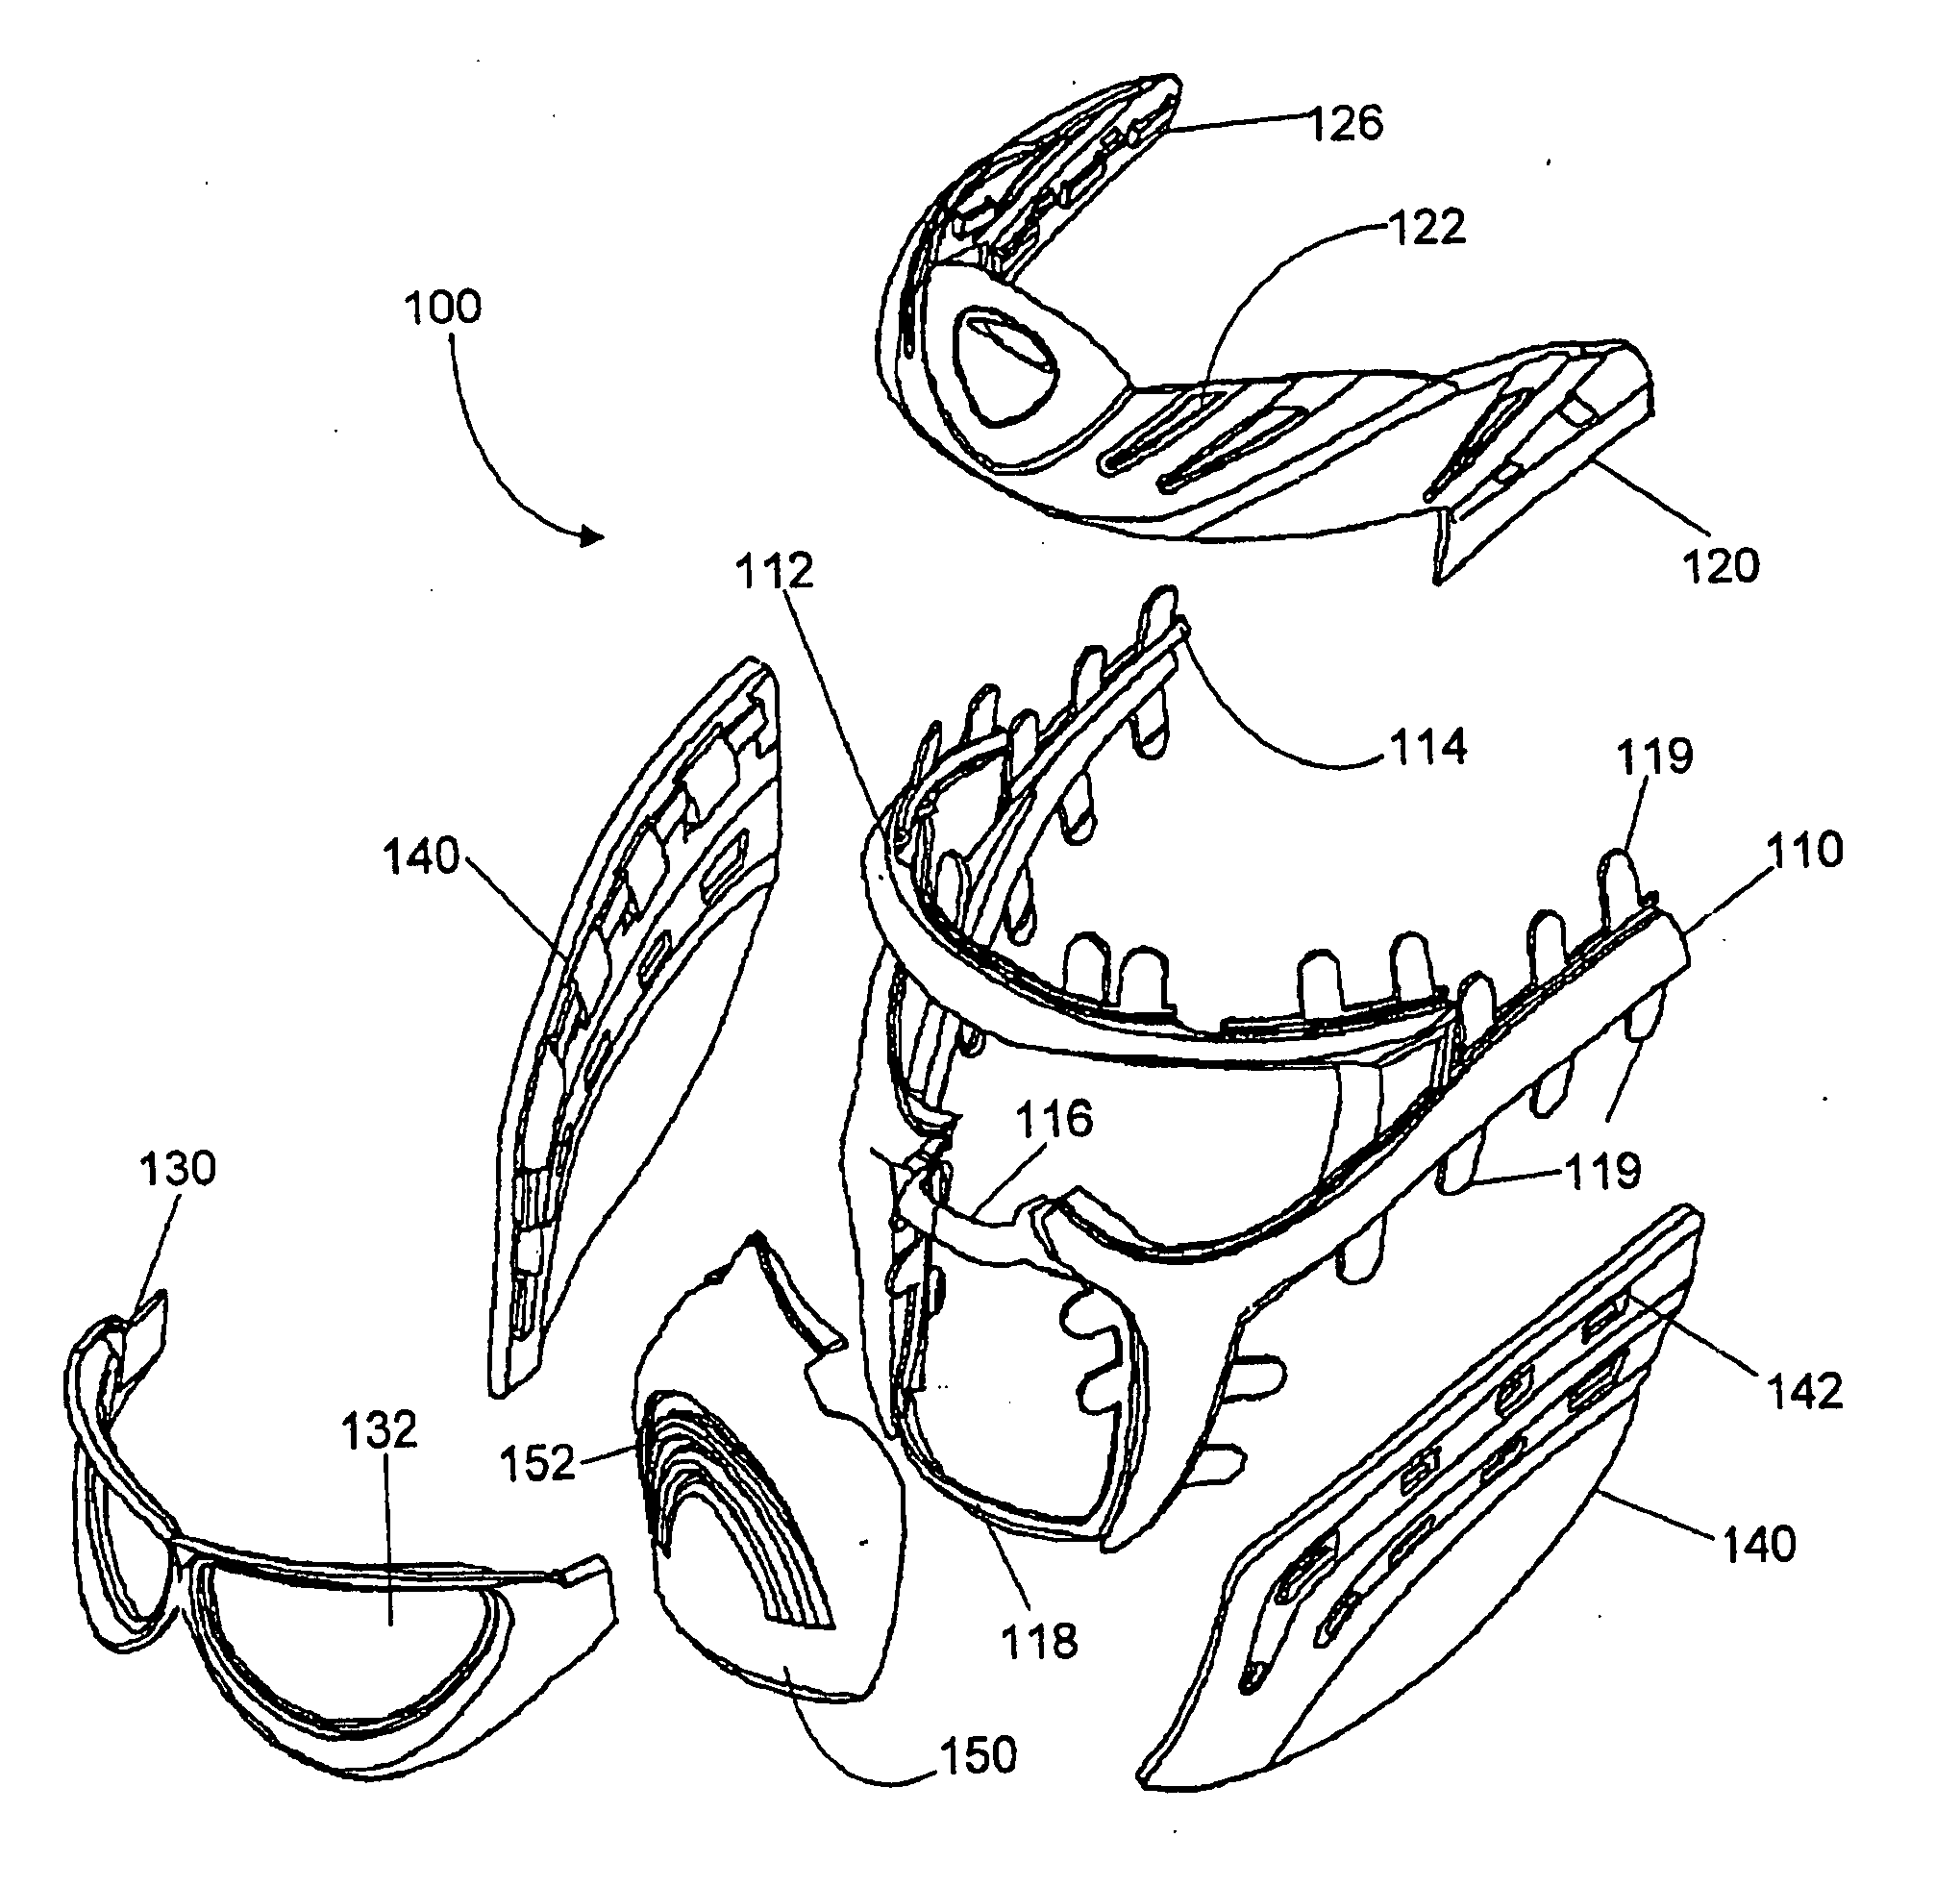 Modular mask system